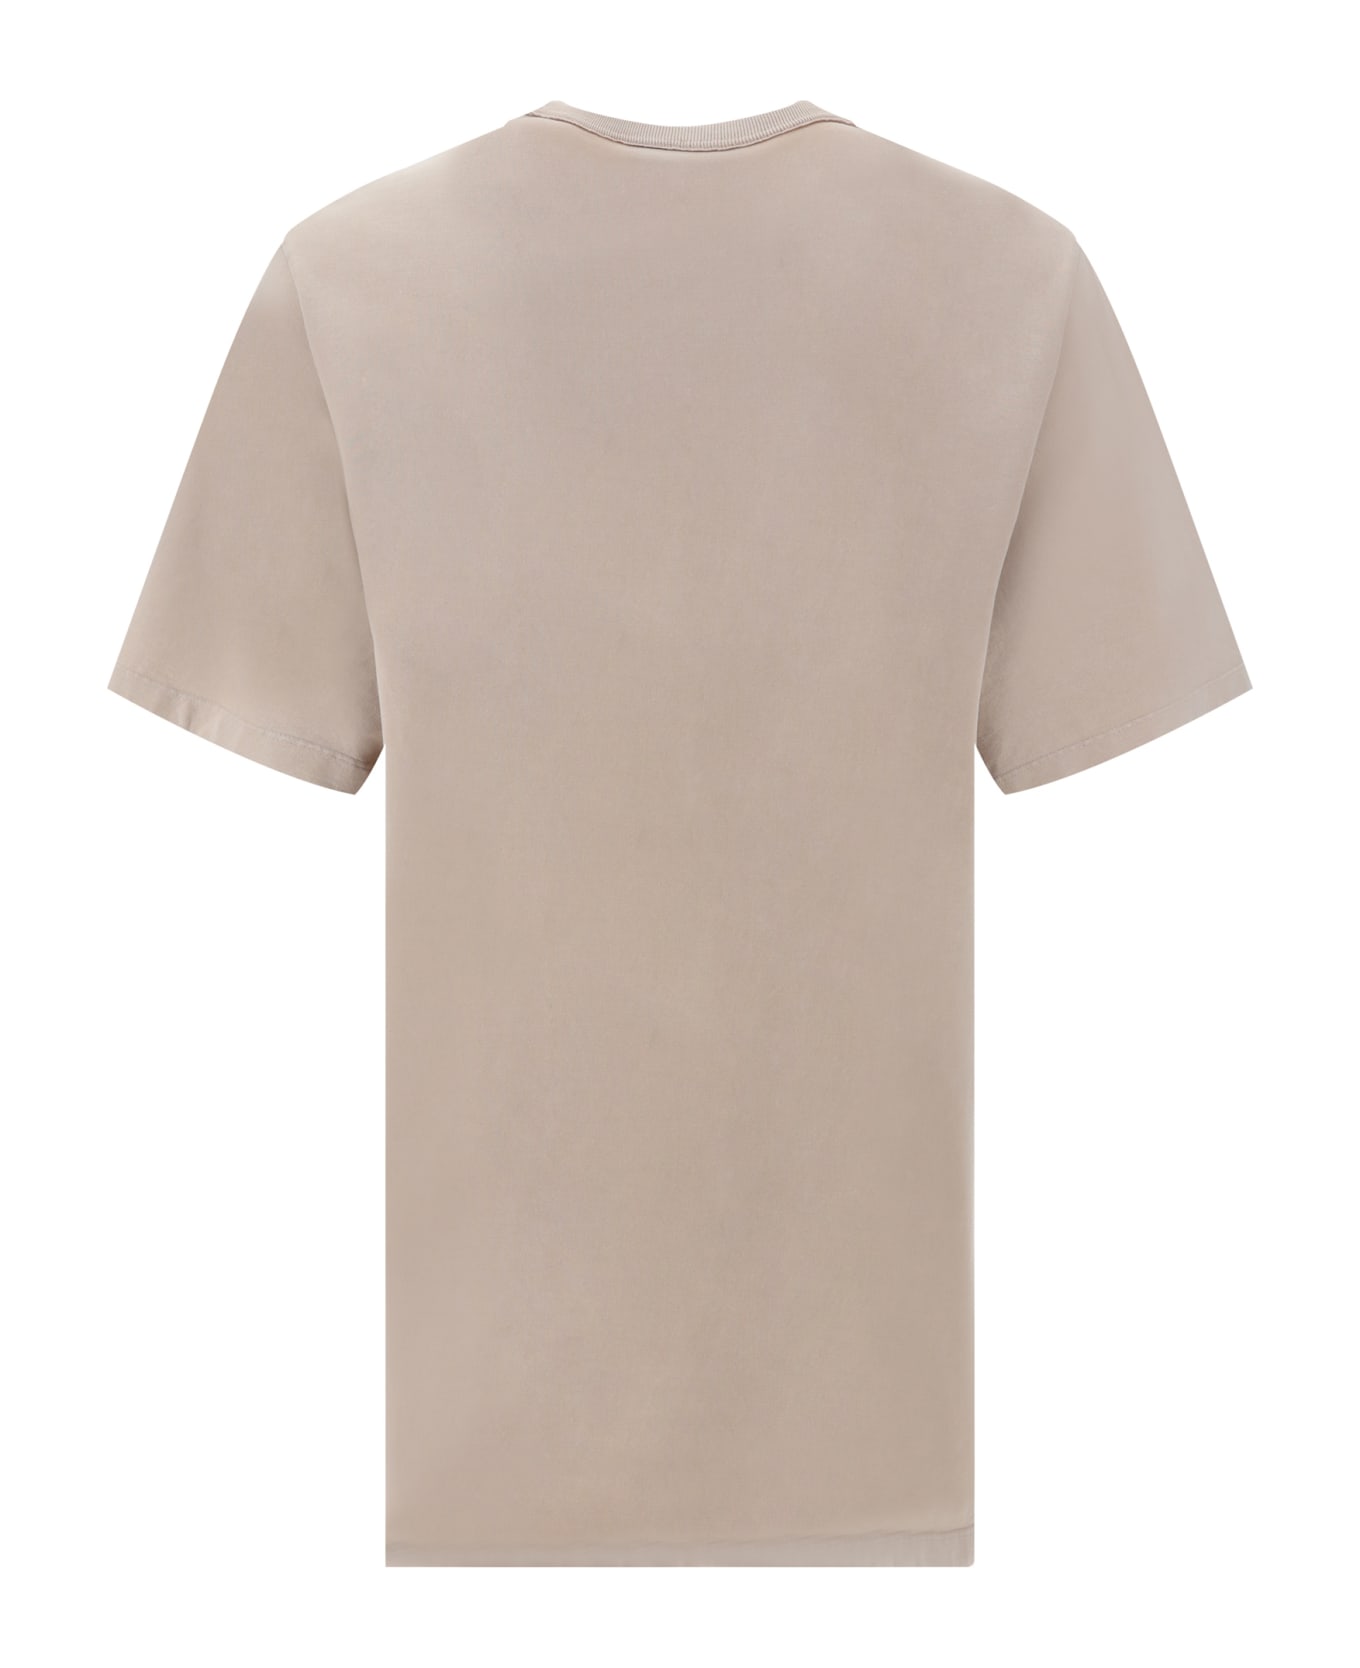 Fendi Washed Compact Jersey T-shirt - Fendi Cotton Sweatshirt With Embroidery